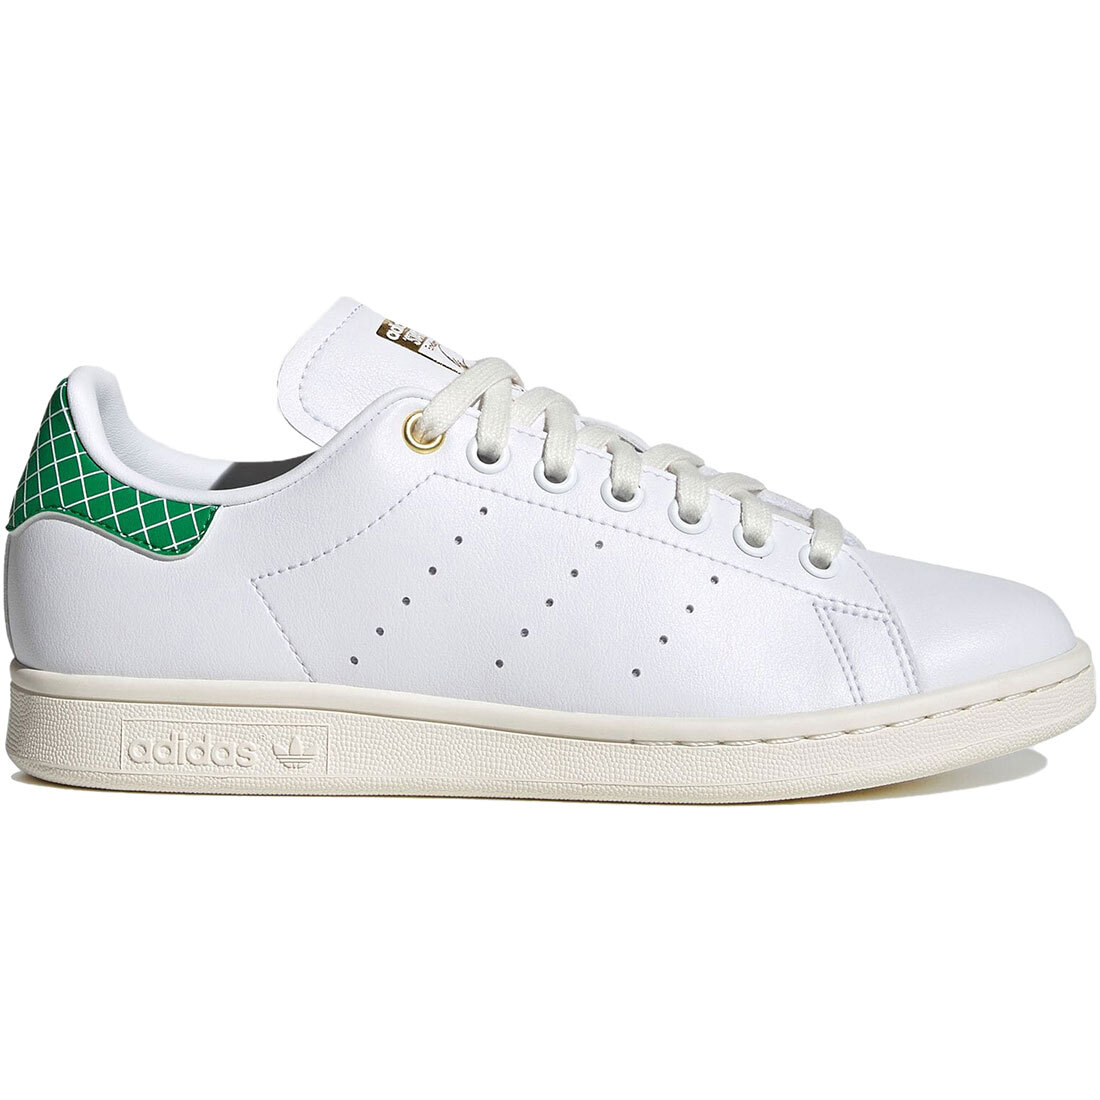  Adidas Originals 24.5cm Stansmith white green adidas ORIGINALS STAN SMITH lady's sneakers white green 